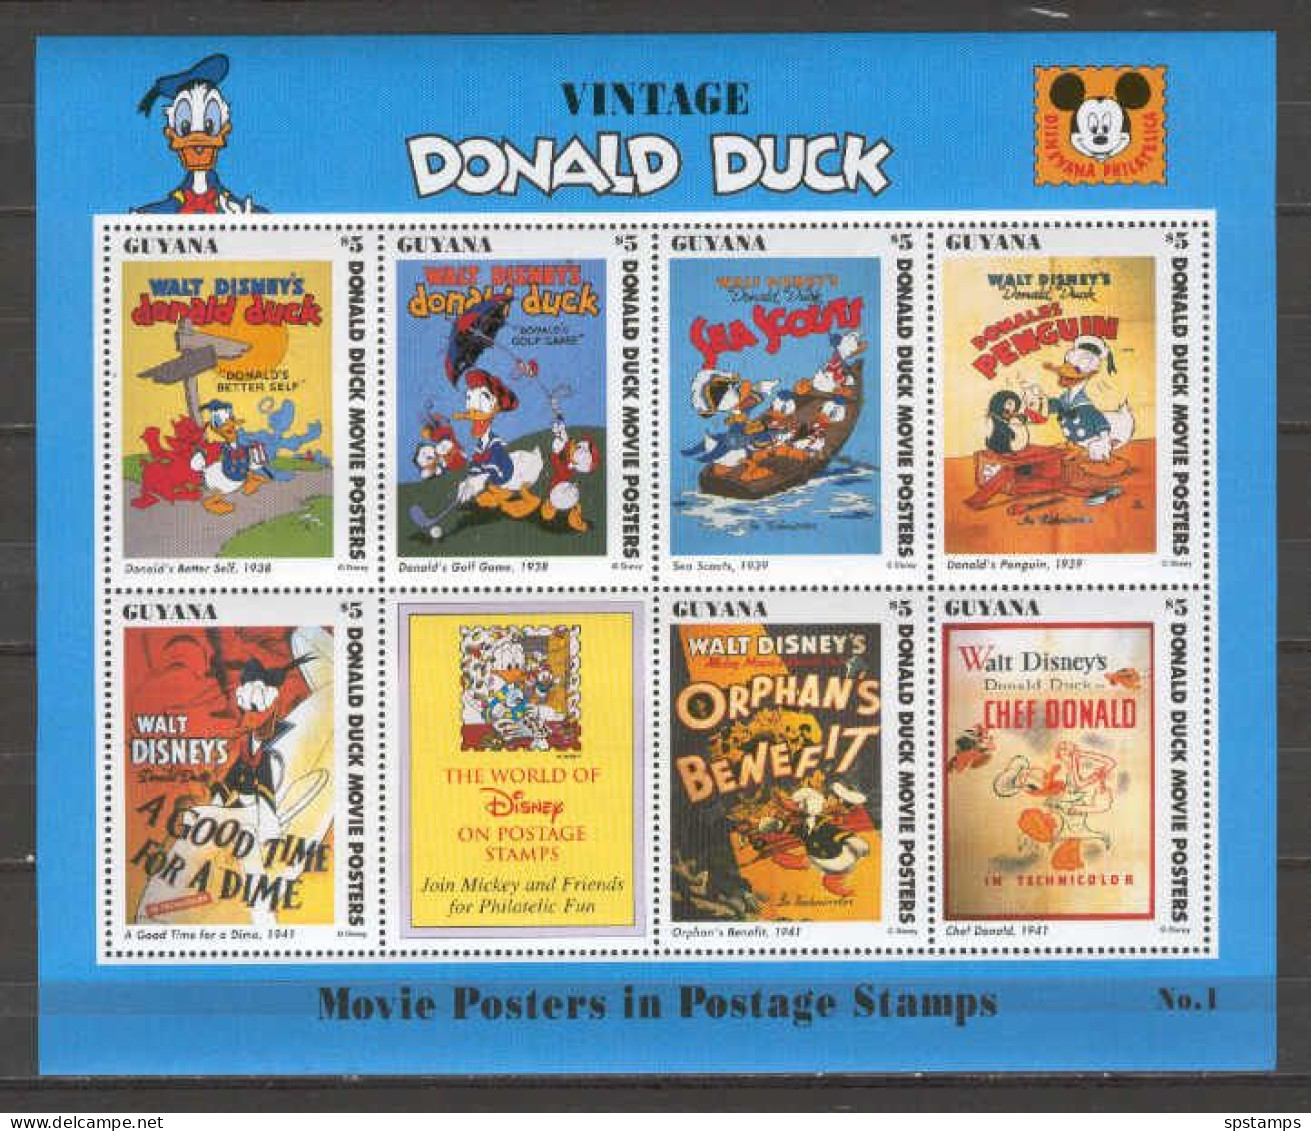 Disney Guyana 1993 Donald Duck - Movie Posters Sheetlet #1 MNH - Disney